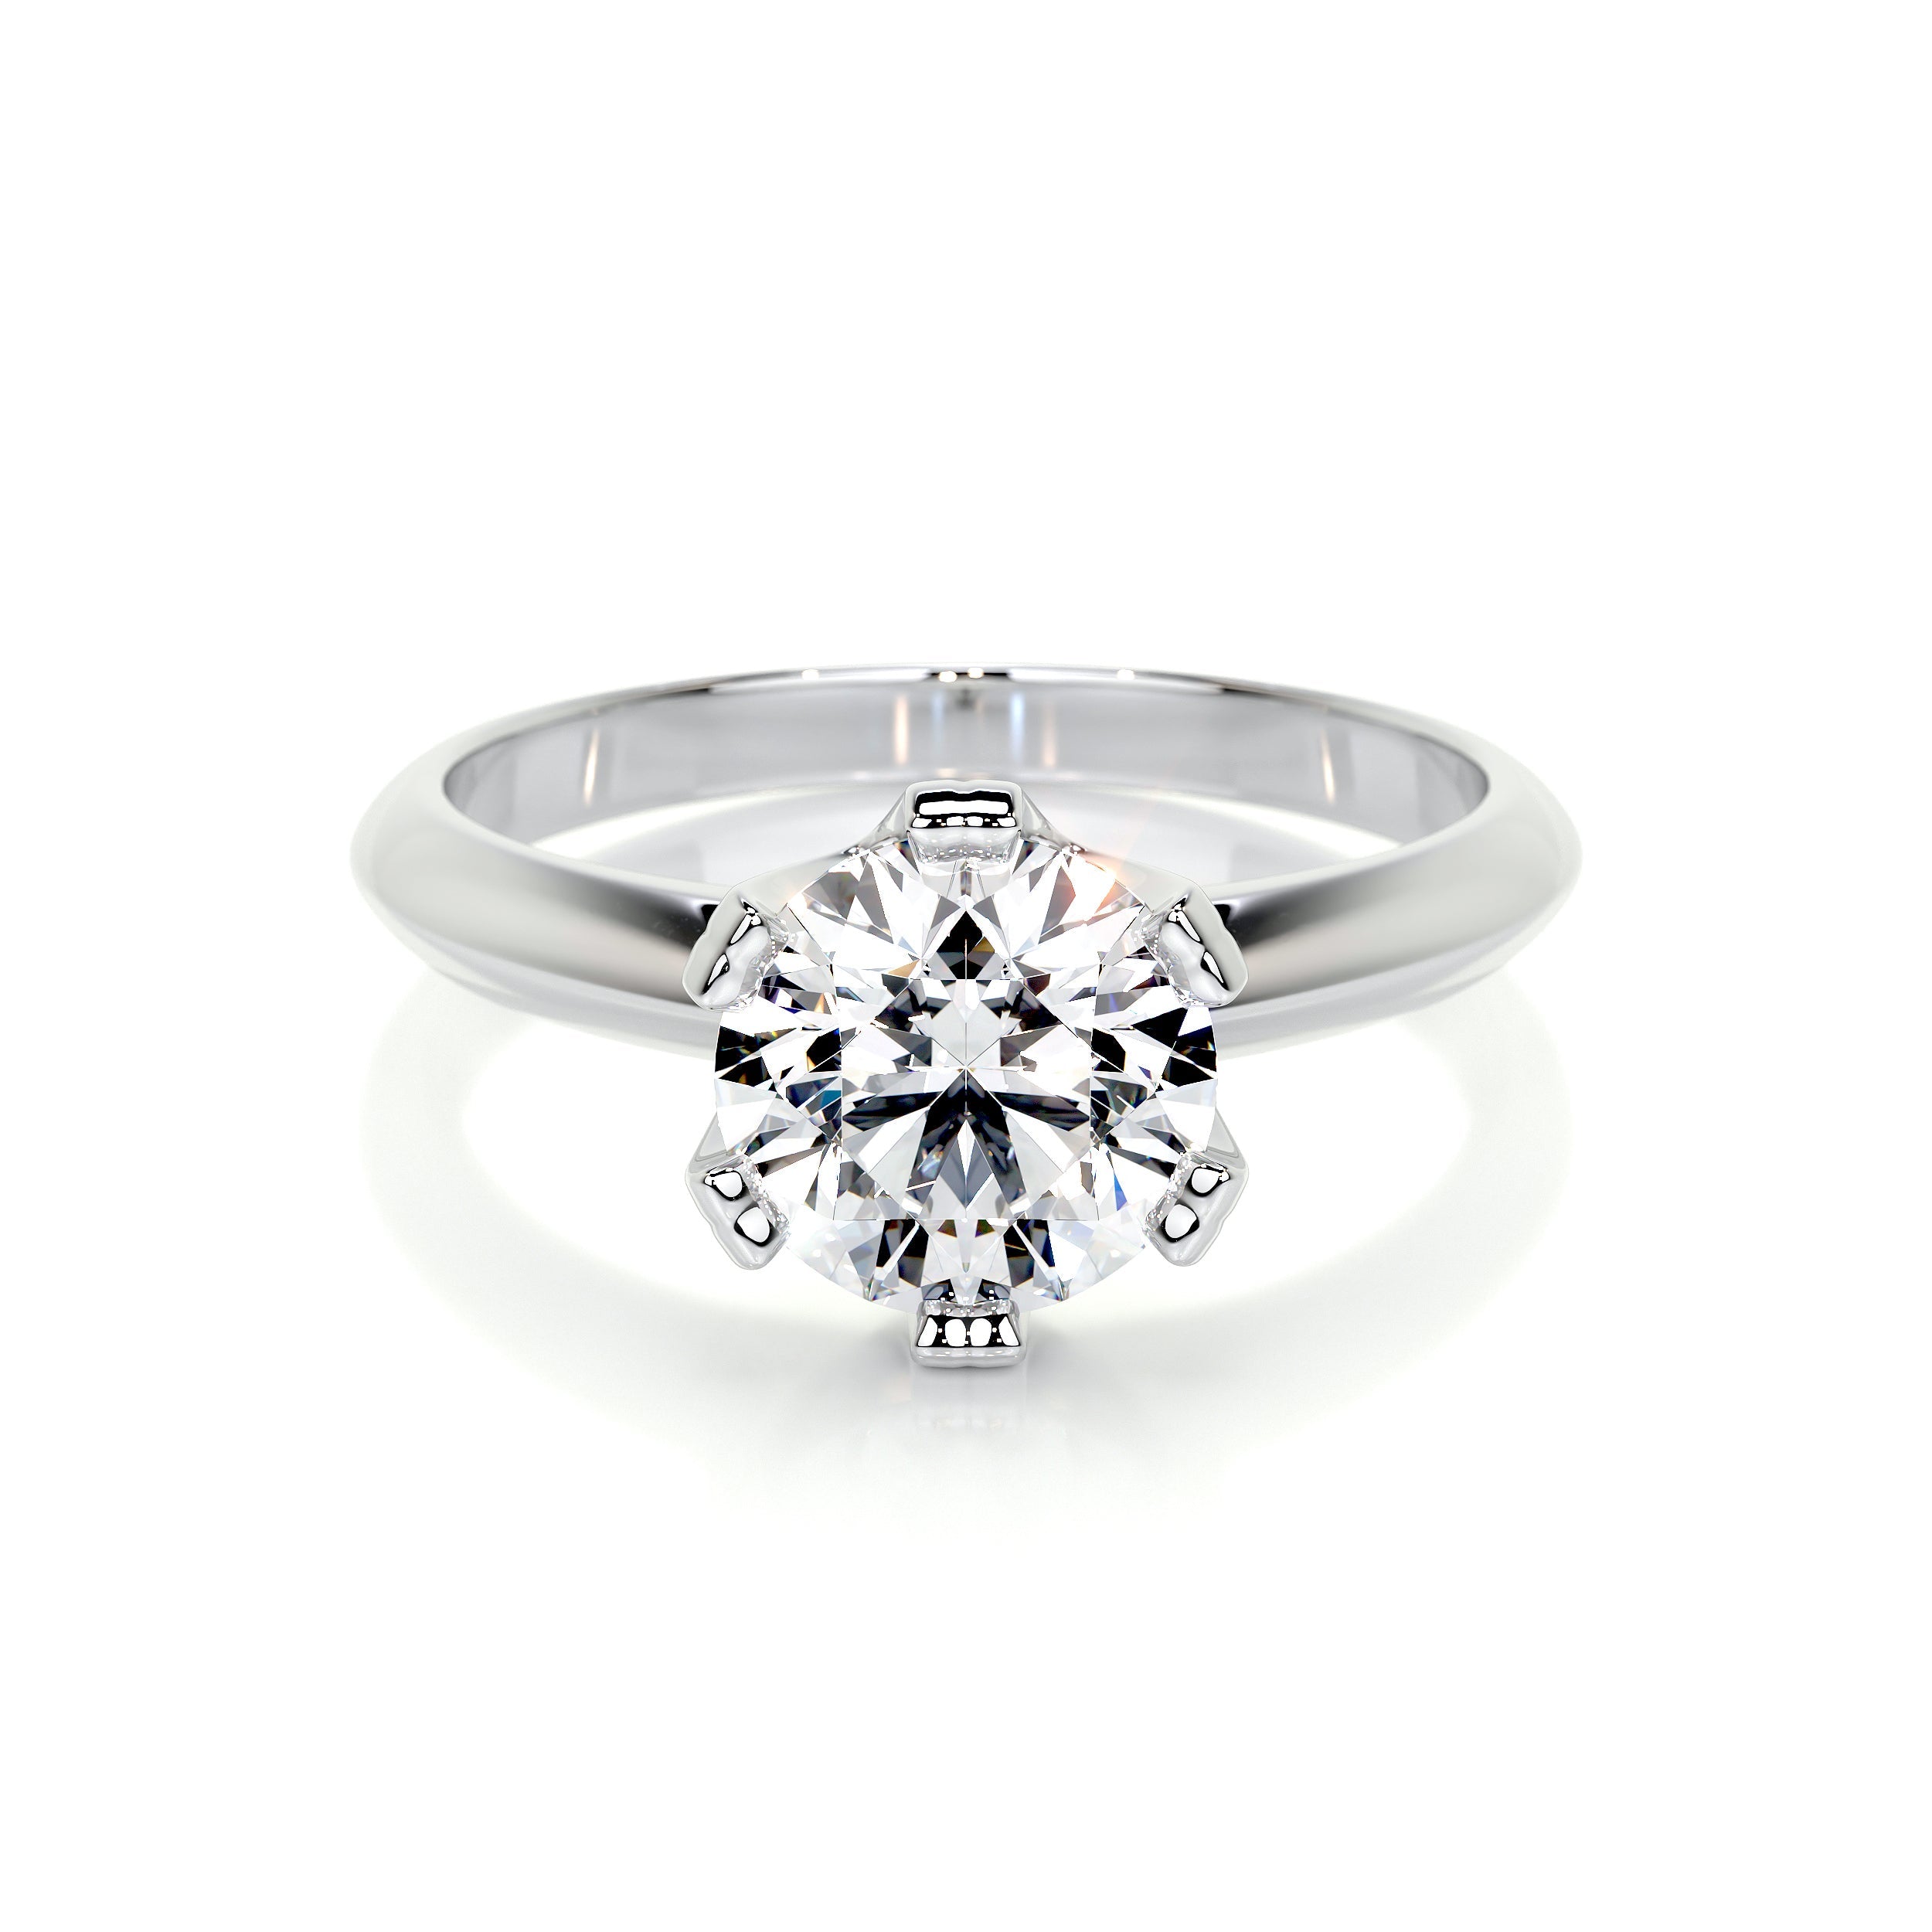 Alexis Lab Grown Diamond Ring   (1.5 Carat) -Platinum